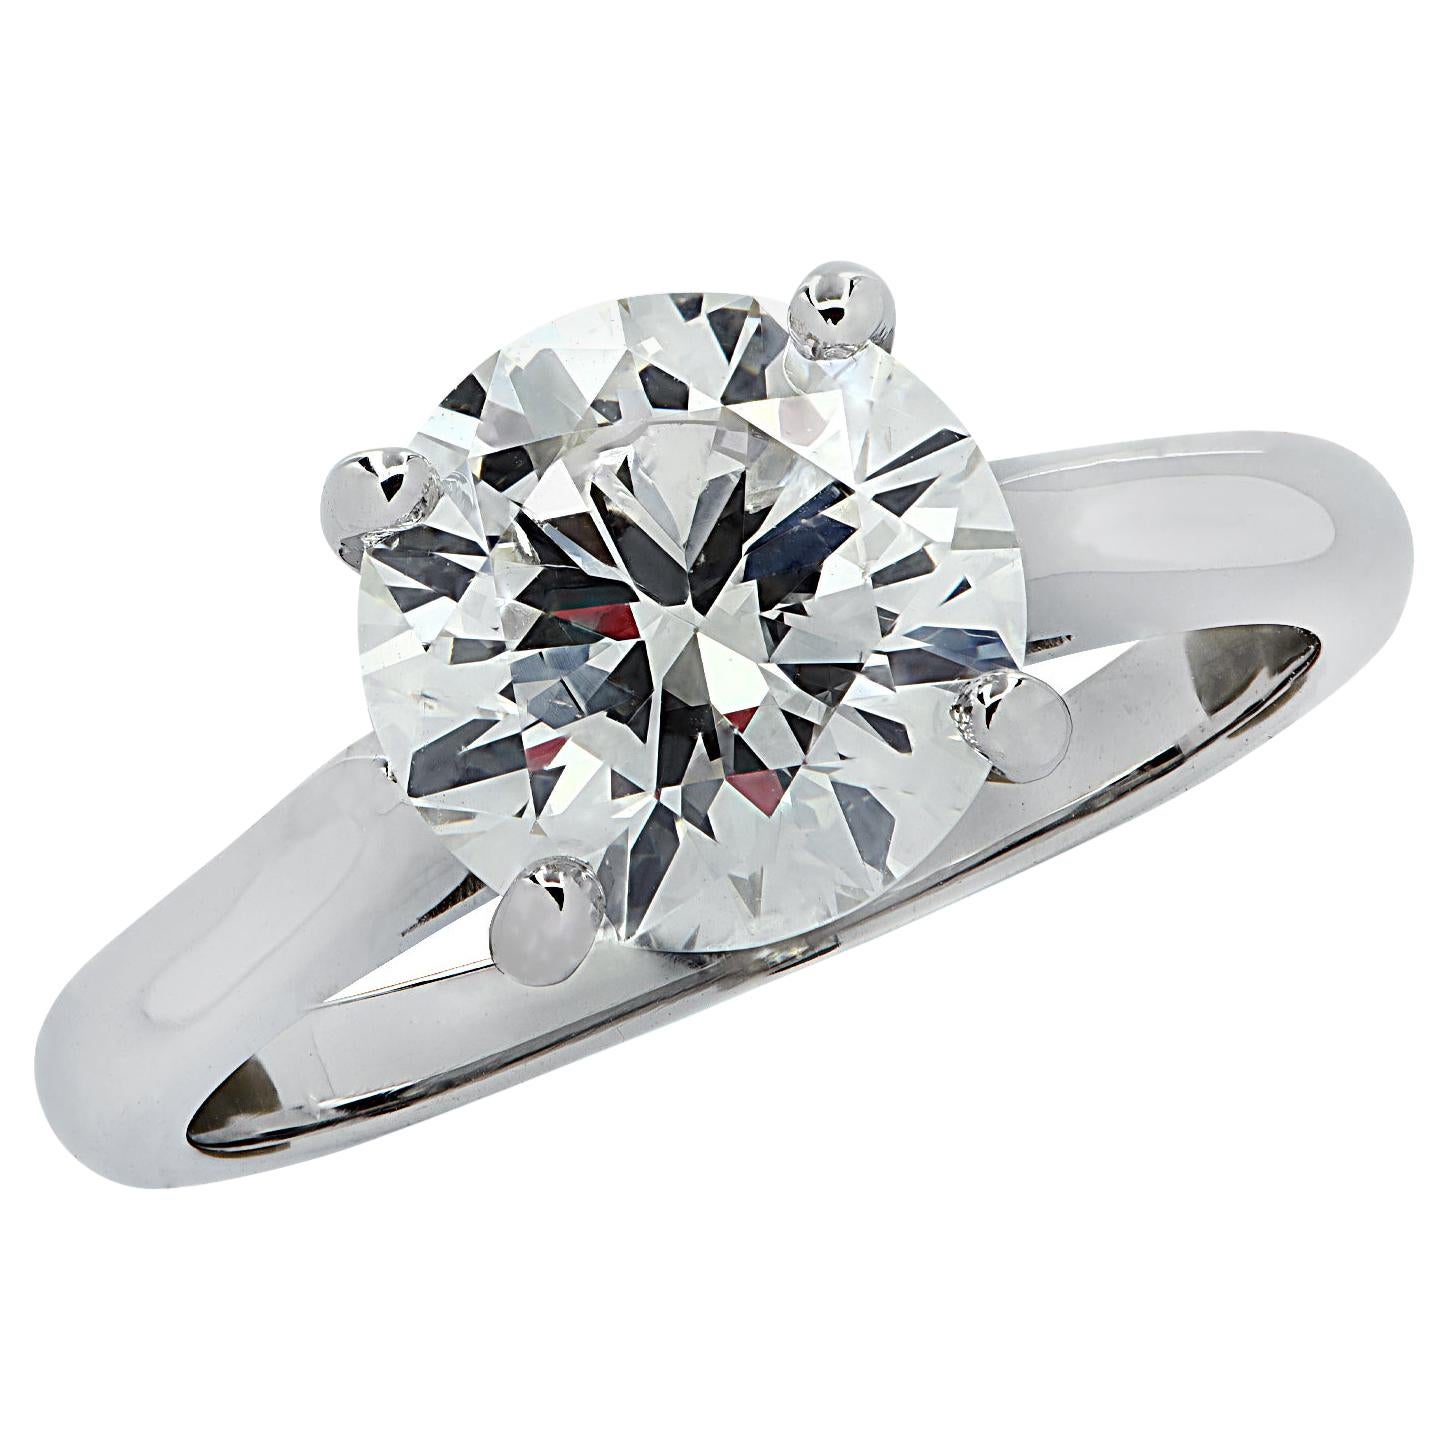 Vivid Diamonds GIA Certified 2.03 Carat Diamond Solitaire Engagement Ring